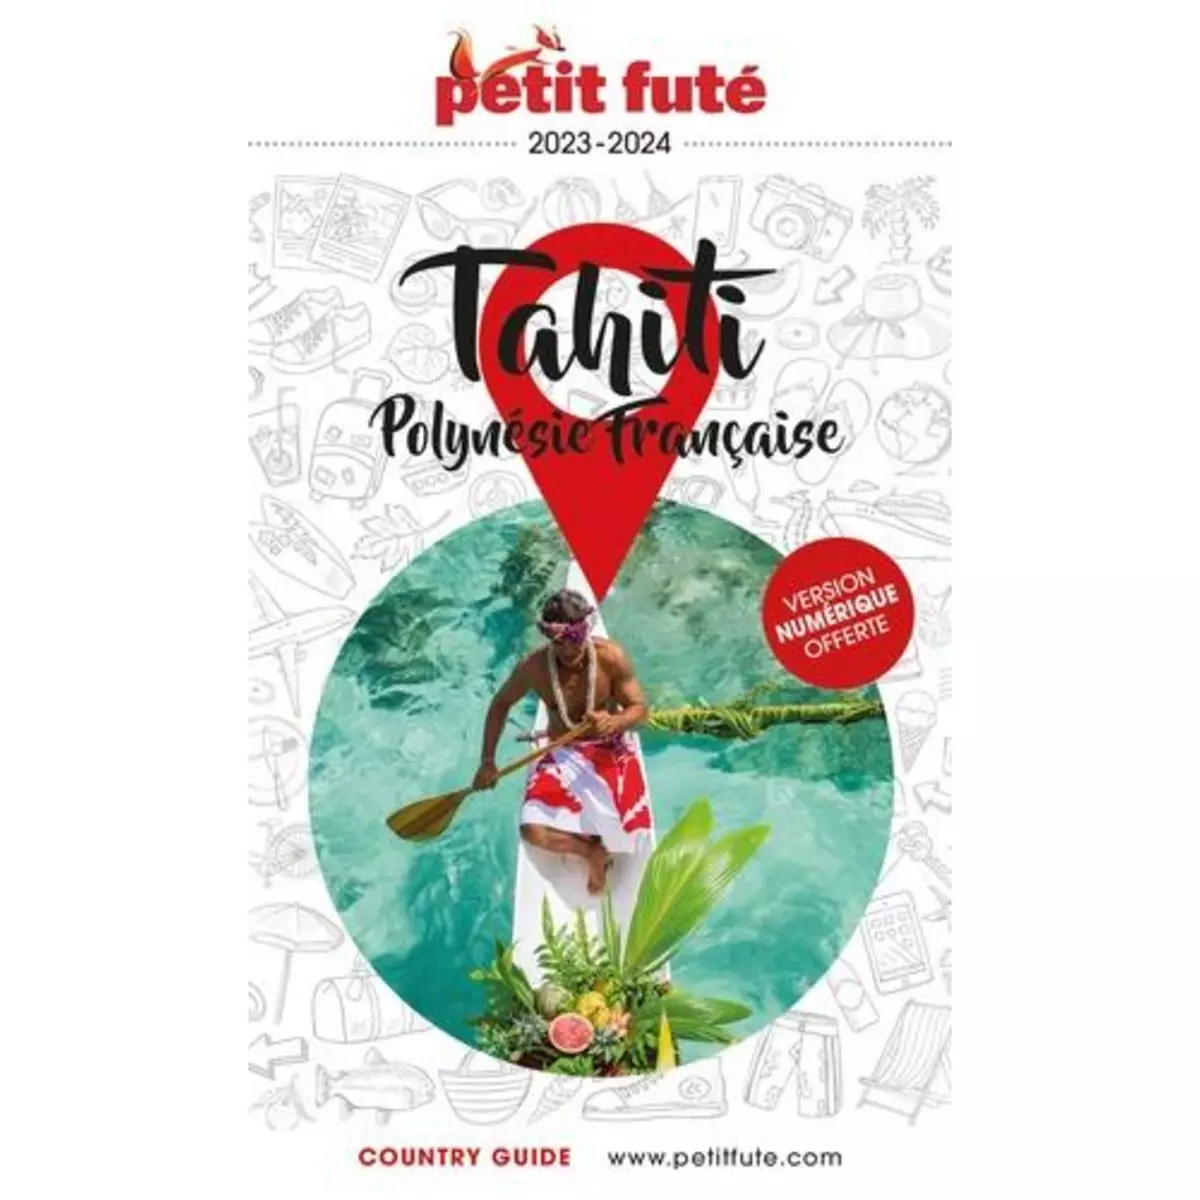  PETIT FUTE TAHITI POLYNESIE FRANCAISE. EDITION 2023-2024, Petit Futé